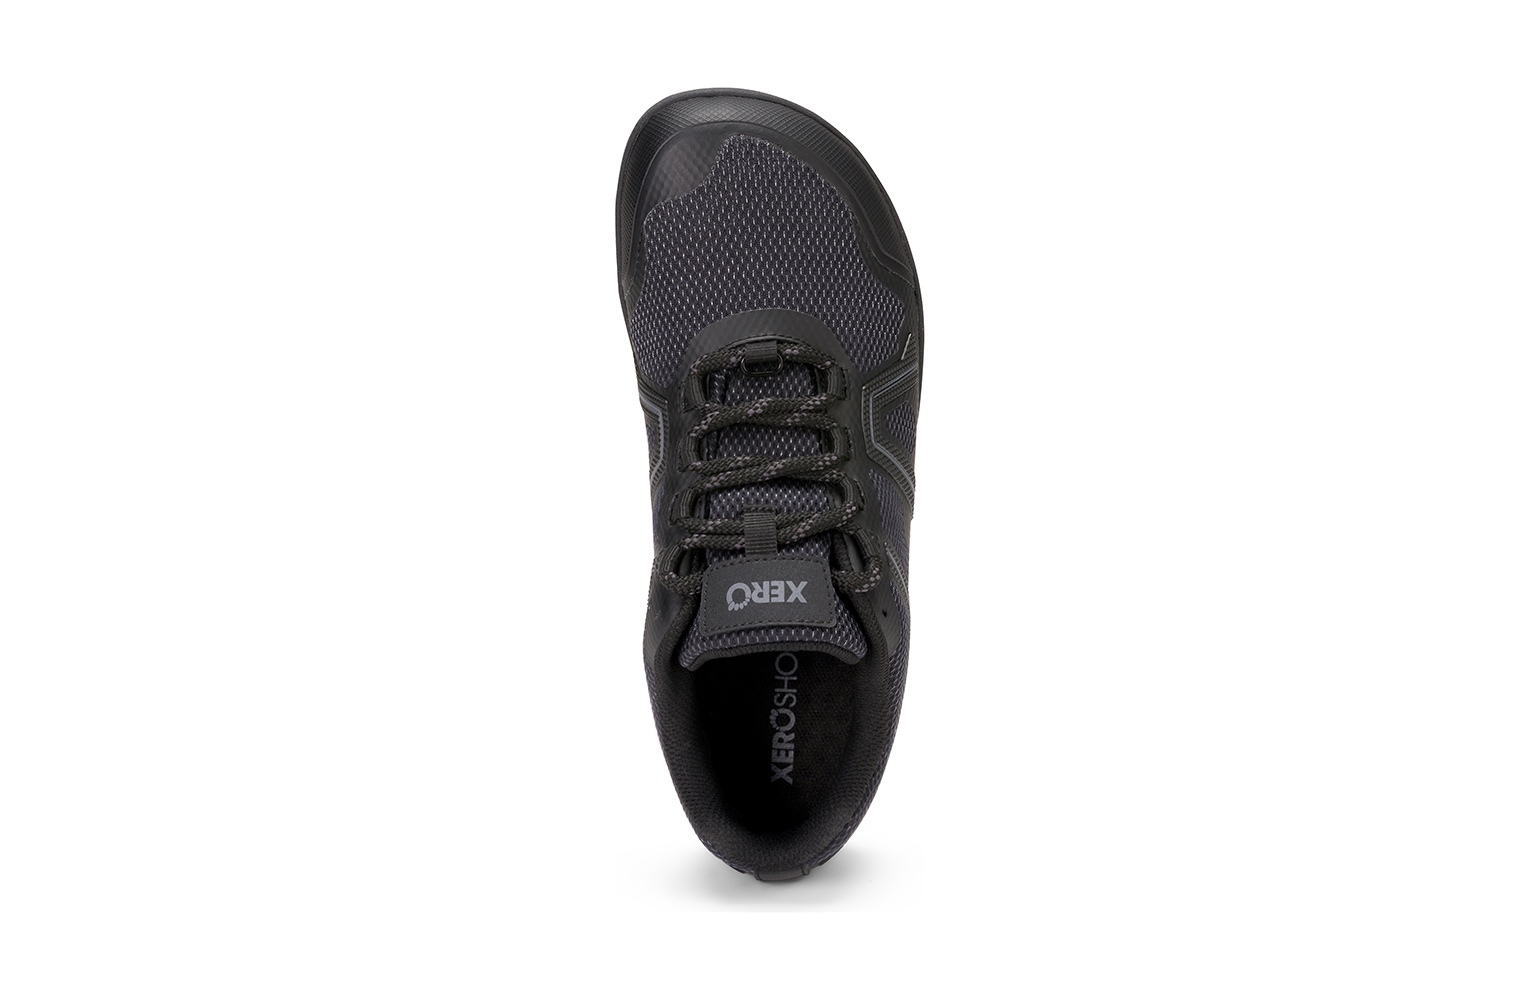 Xero Shoes, Mesa Trail WP - MXW-BLK - black, dames, maat 38 eu